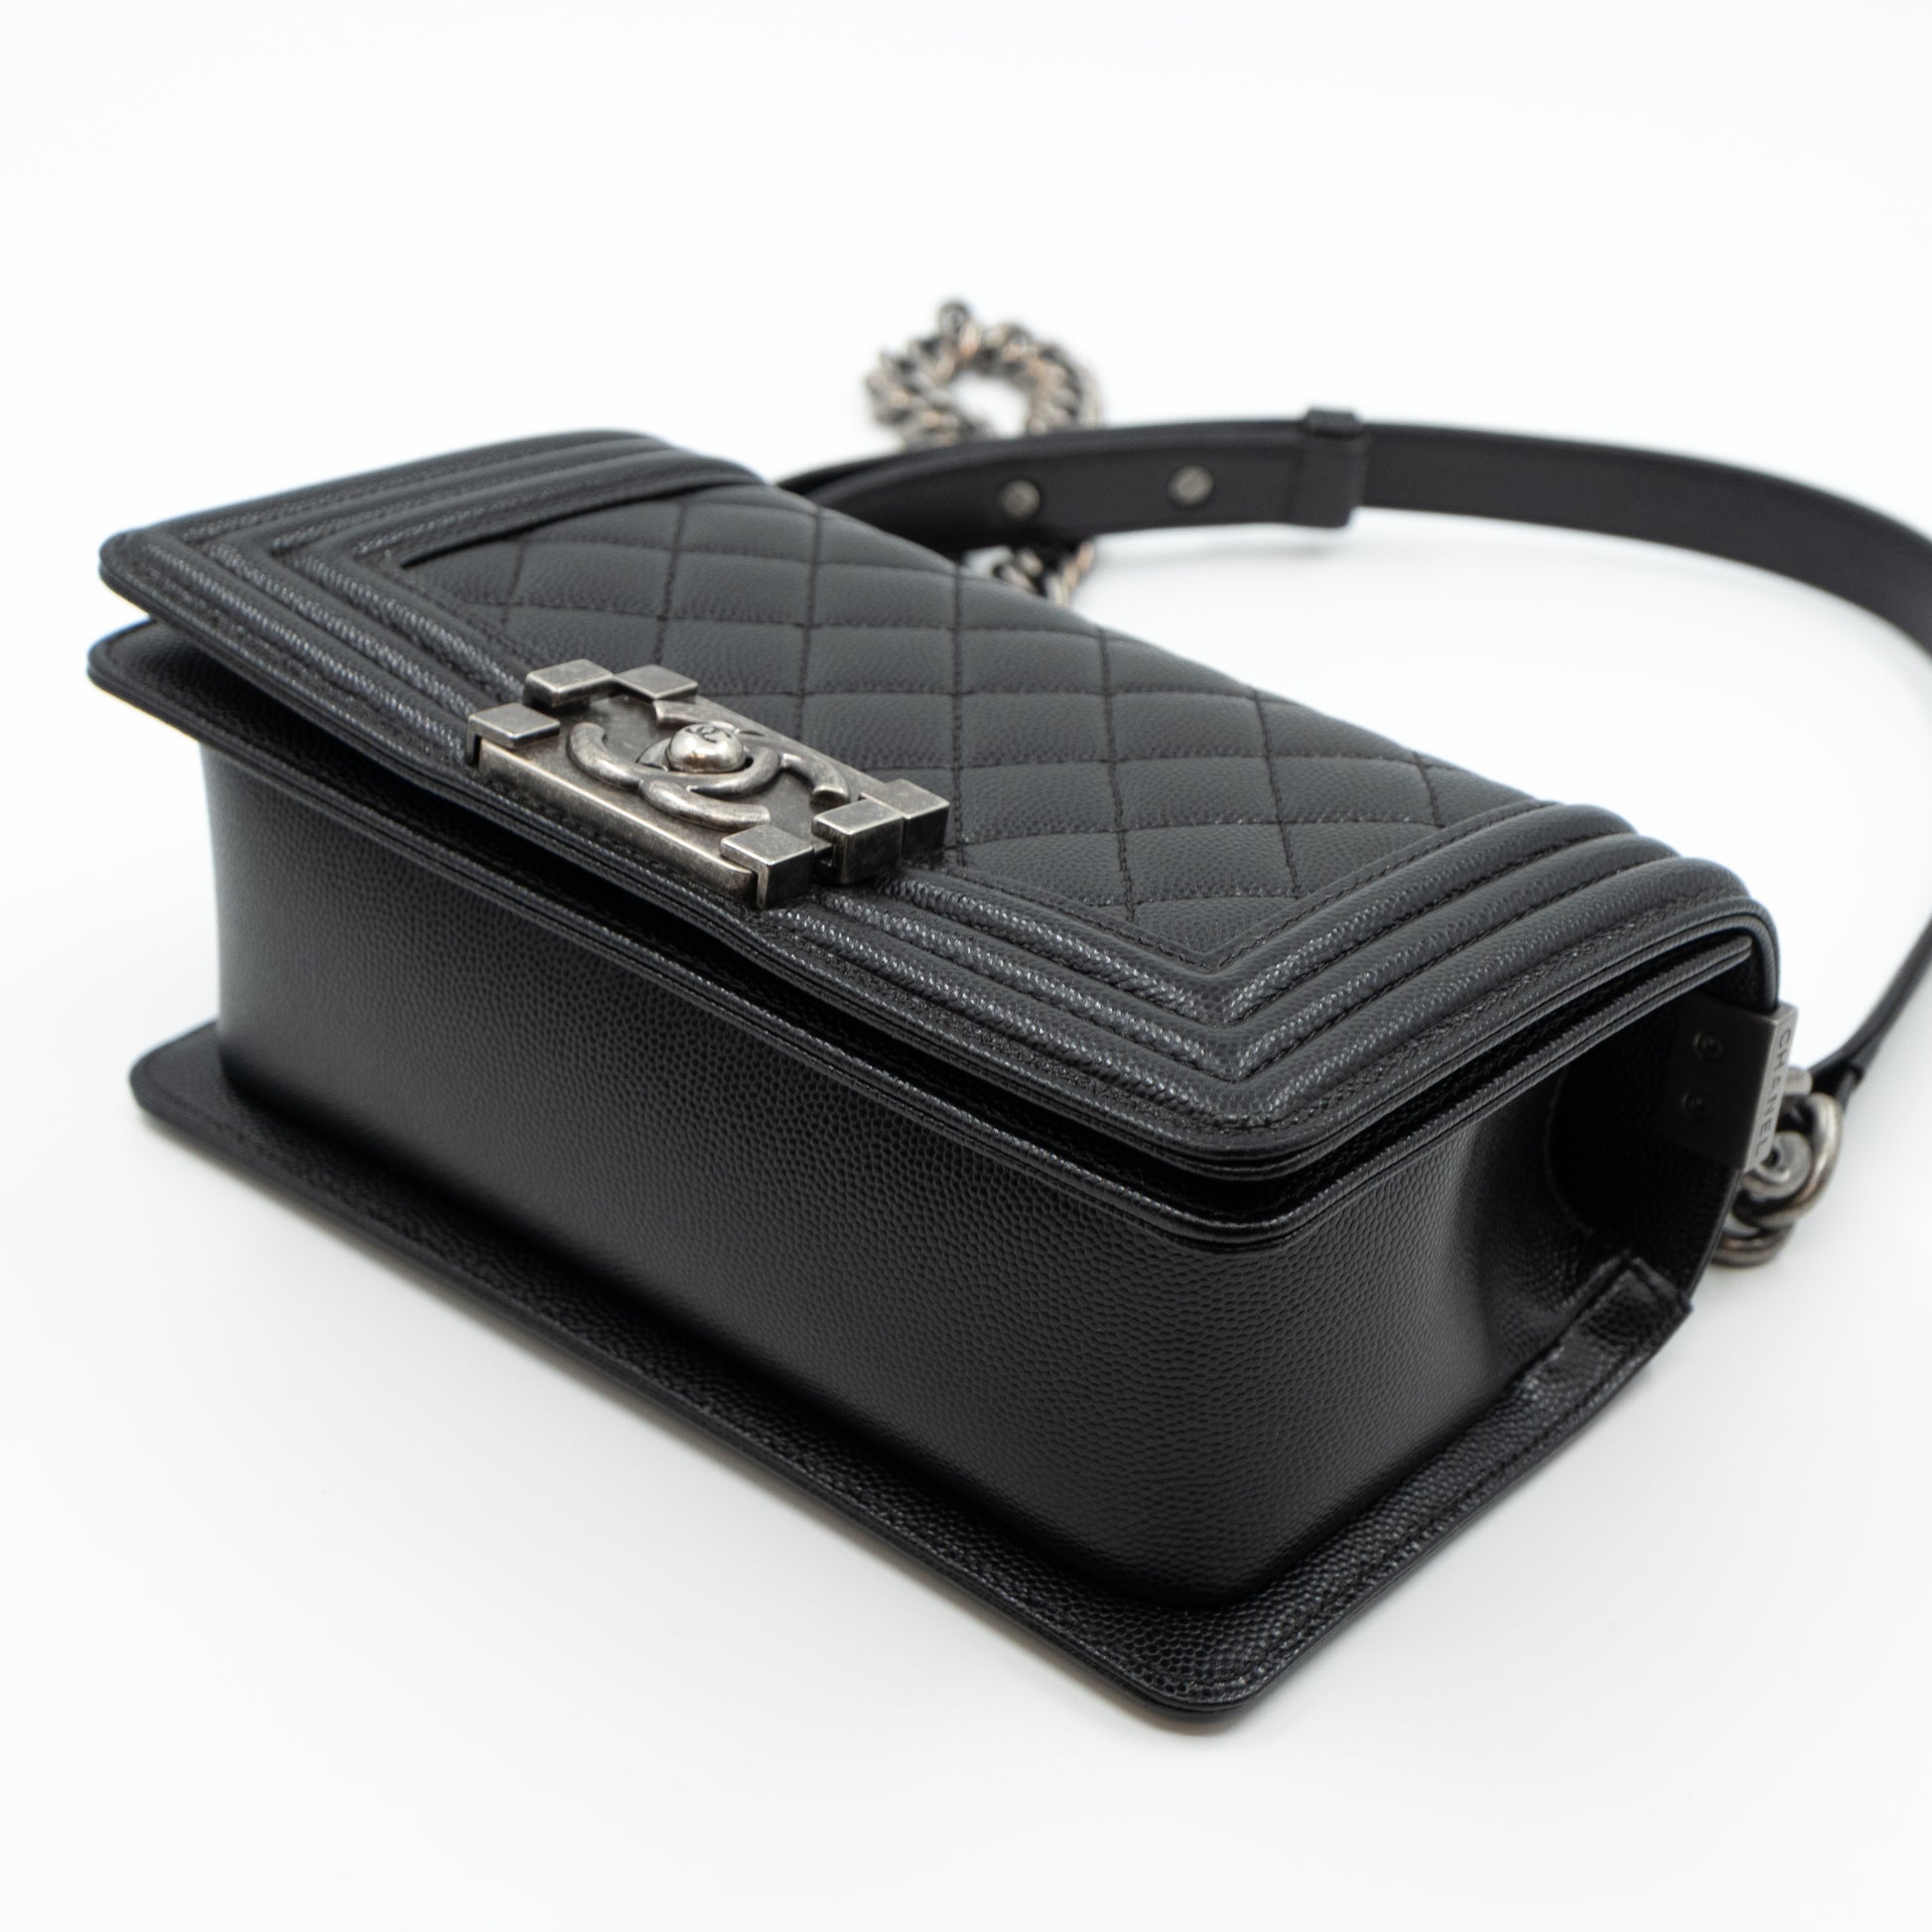 Chanel – Chanel Boy Flap Bag Small Black Caviar Ruthenium – Queen Station